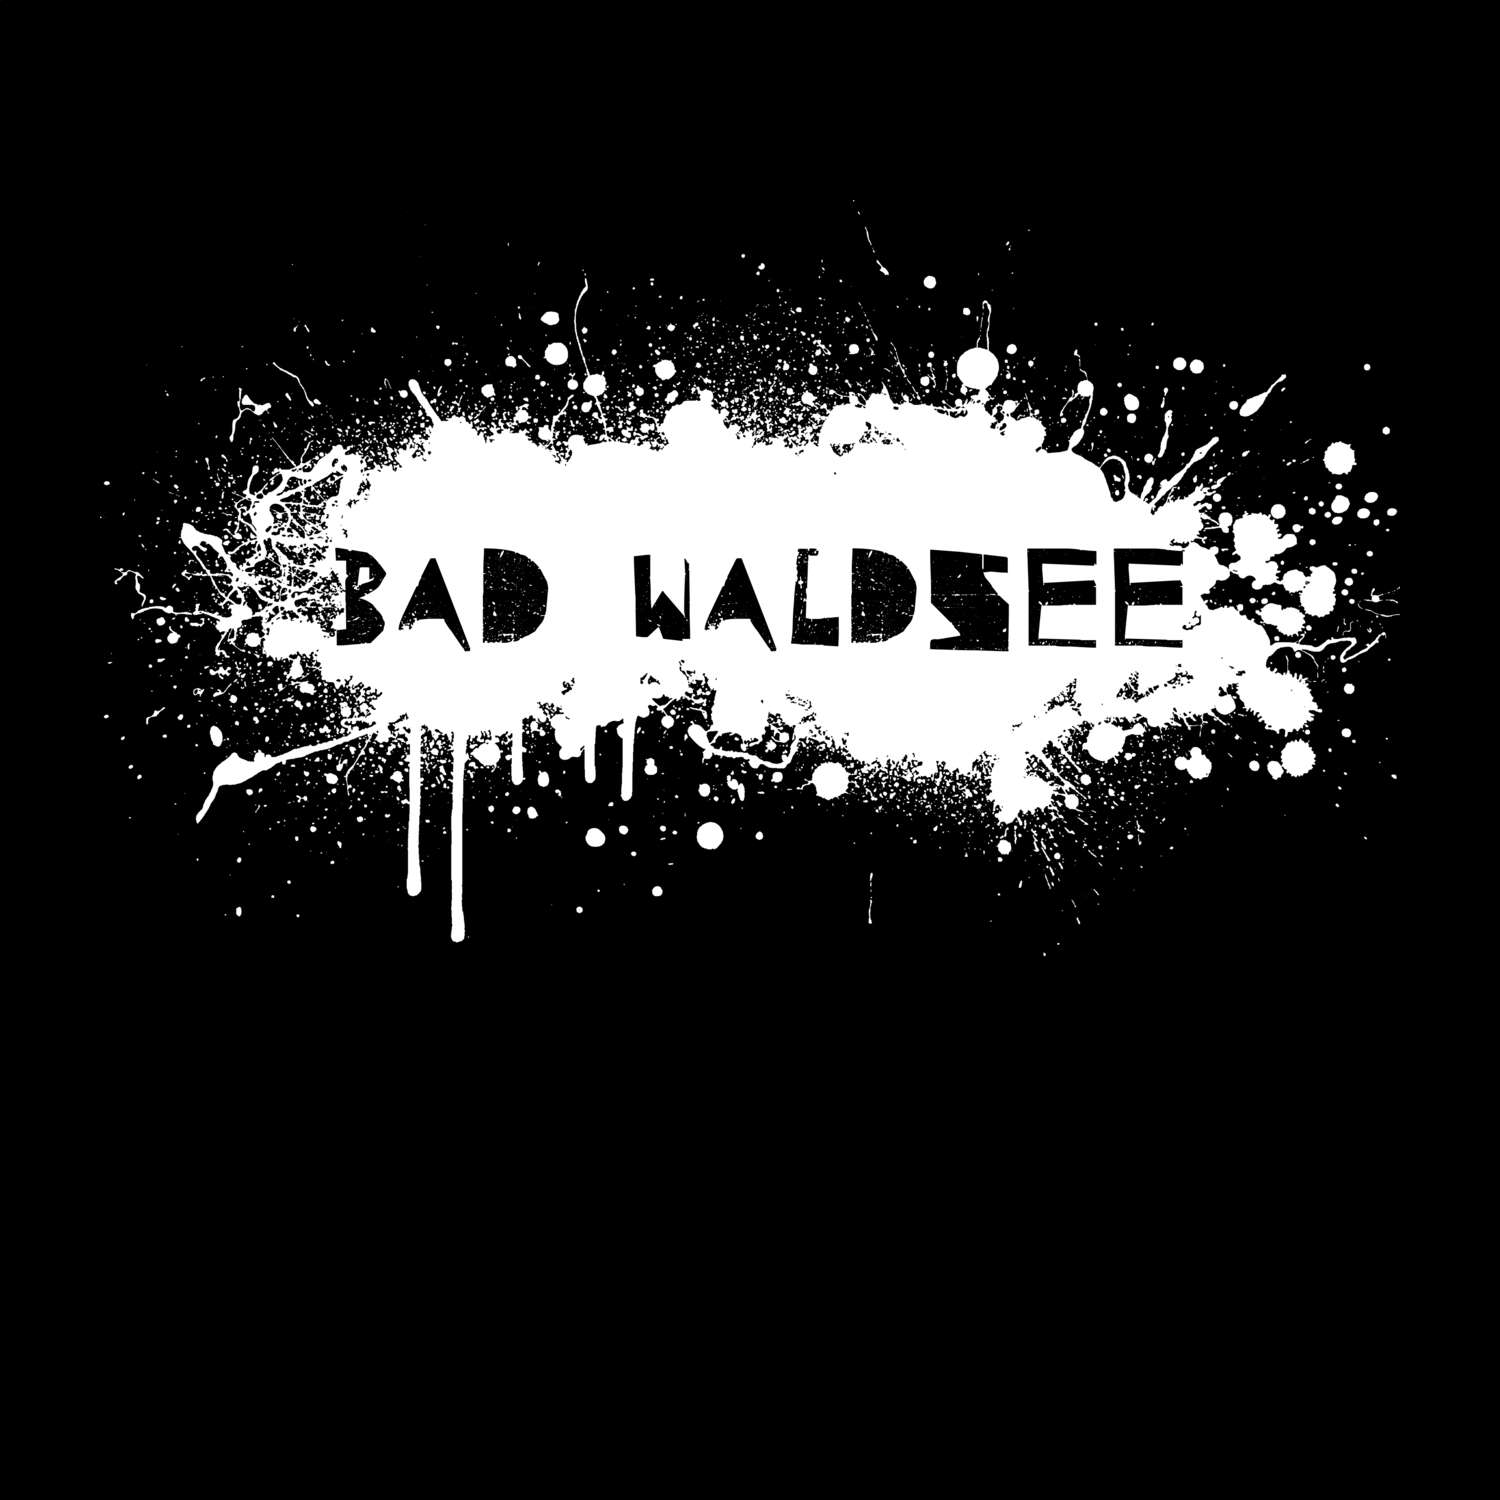 Bad Waldsee T-Shirt »Paint Splash Punk«